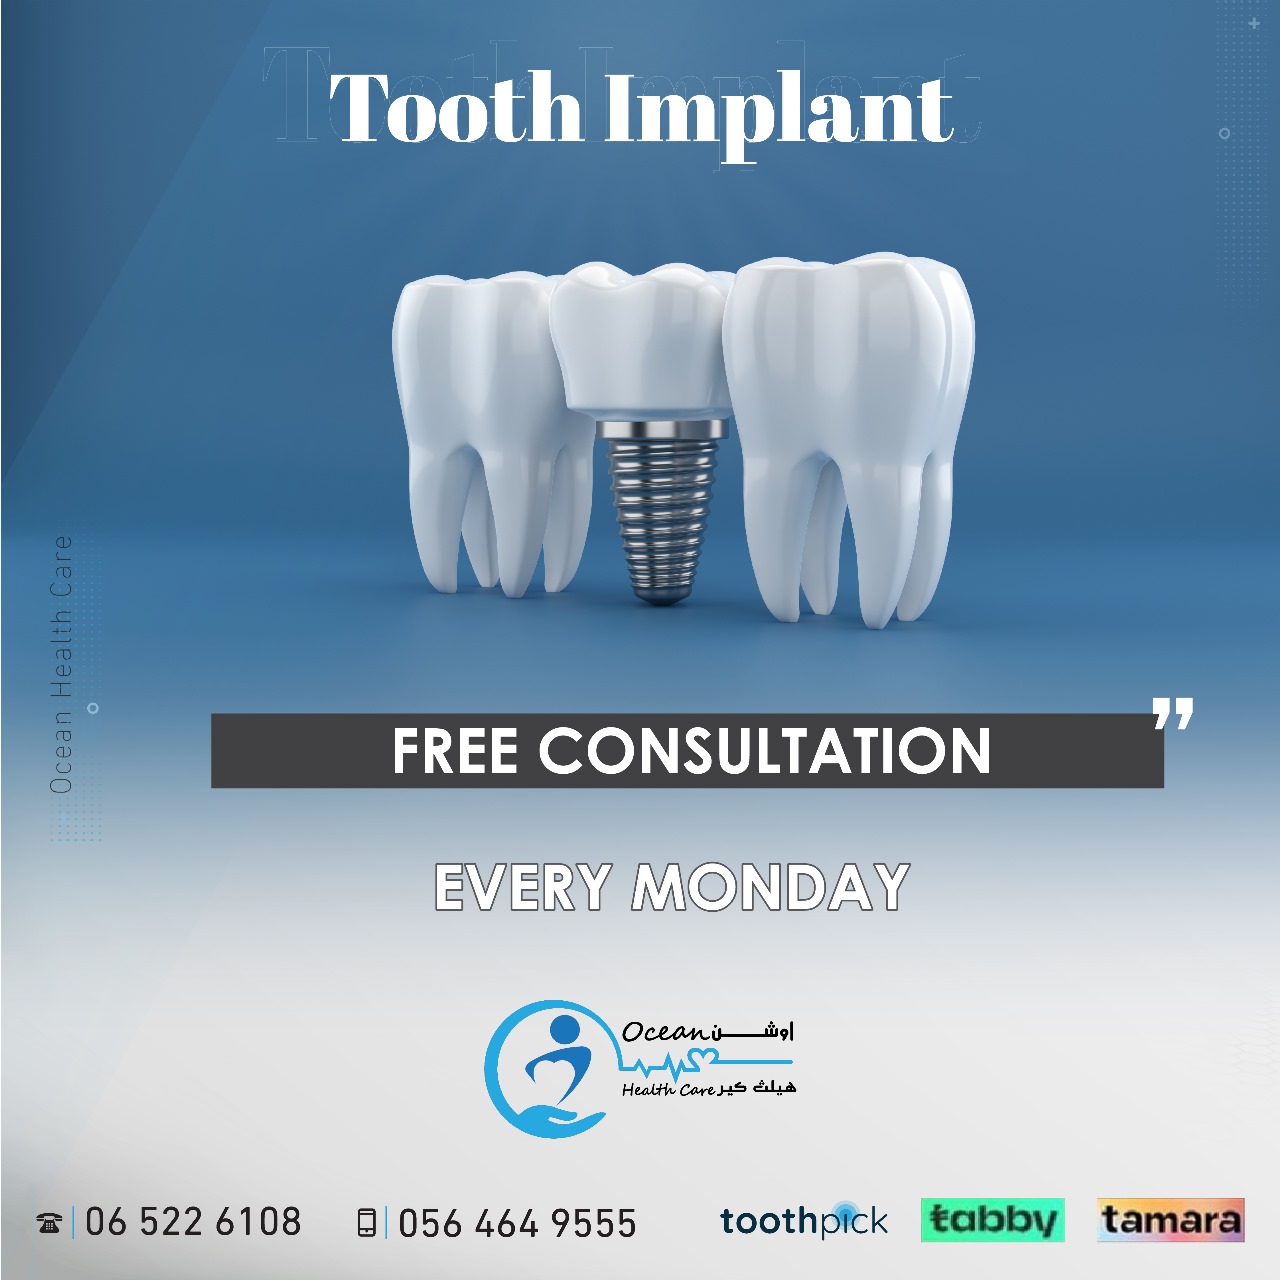 tooth implant, dental, teeth whitening, orthodontics, aligner